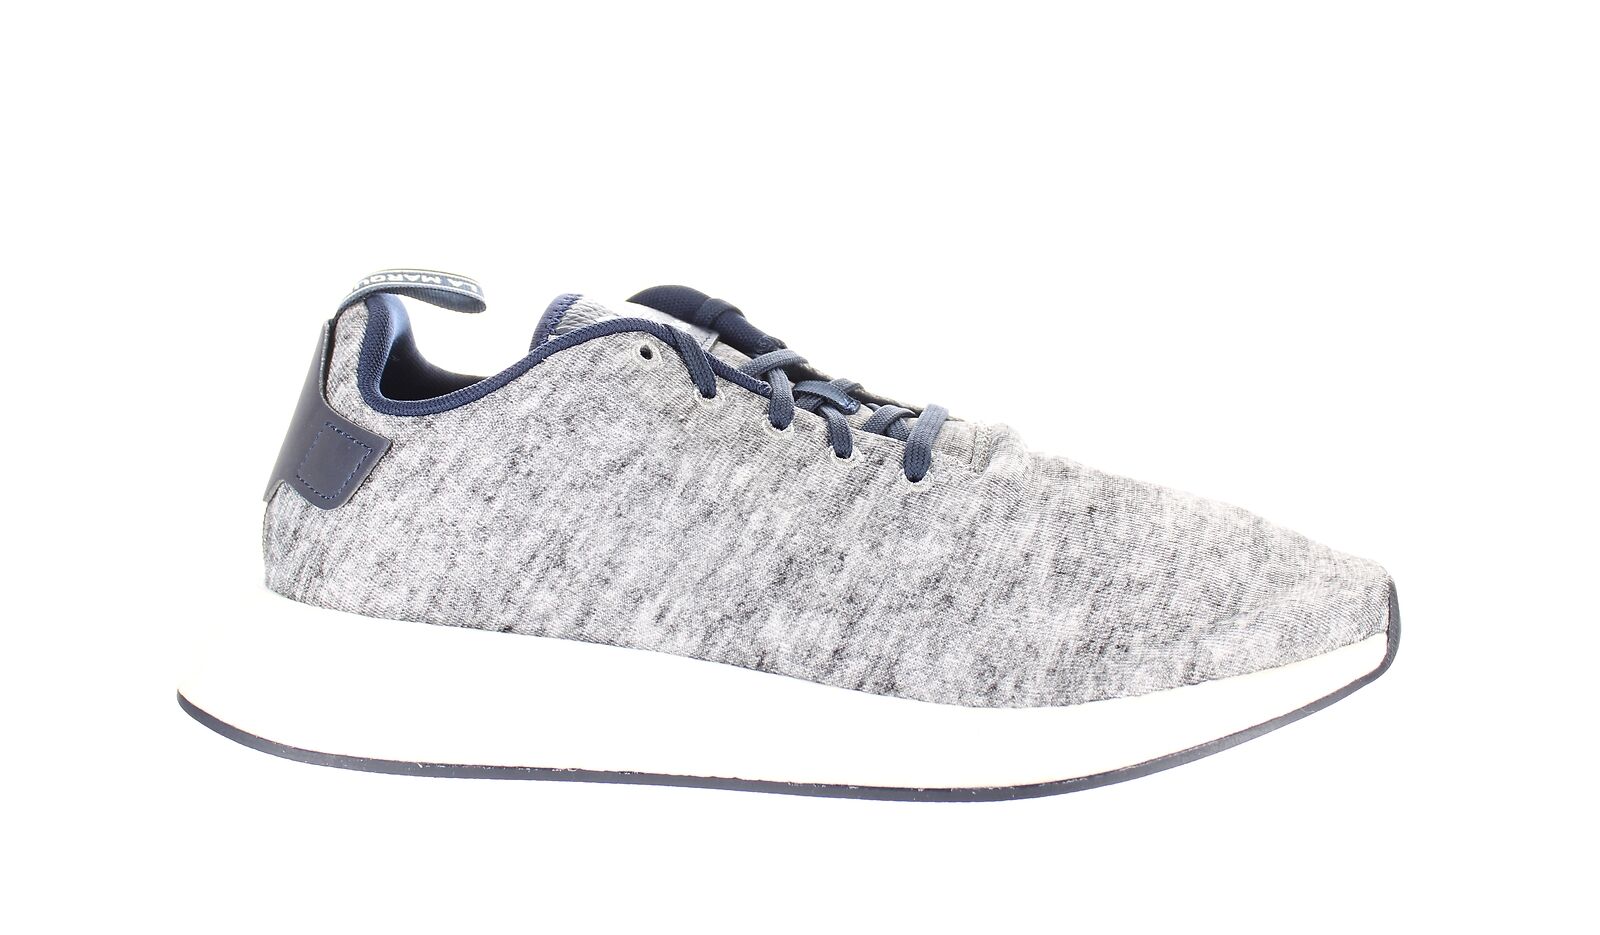 Adidas Mens Nmd R2 Uas Gray Running Shoes Size 11 (2270200)